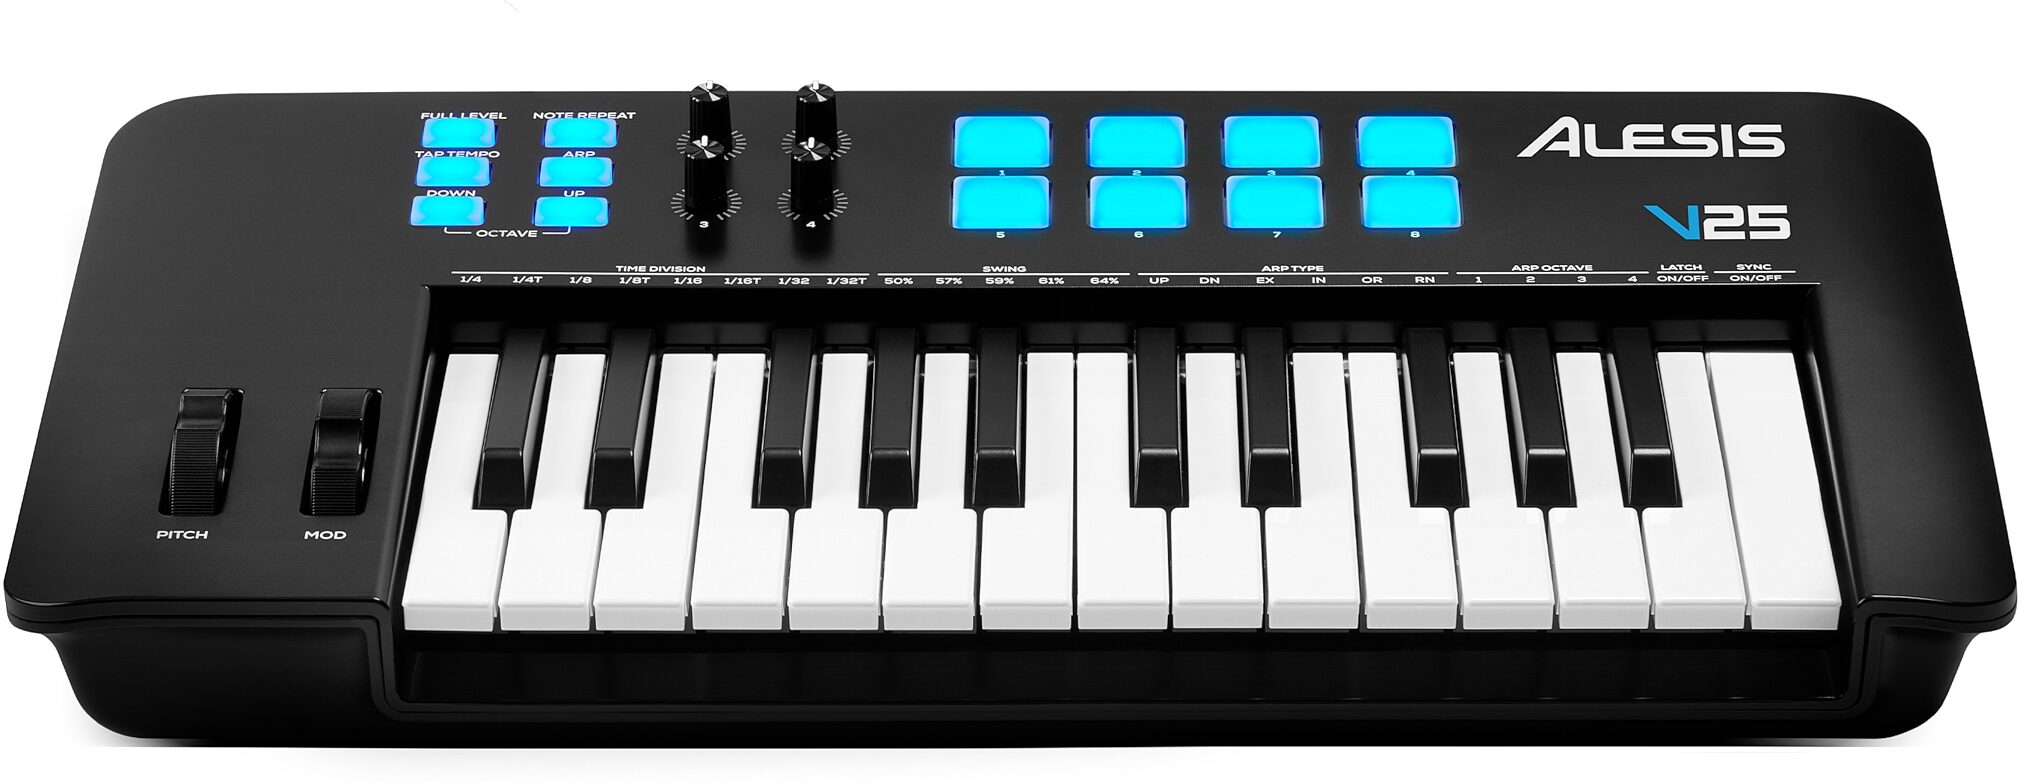 Alesis V25 MKII USB MIDI Controller Keyboard, 25-Key | zZounds